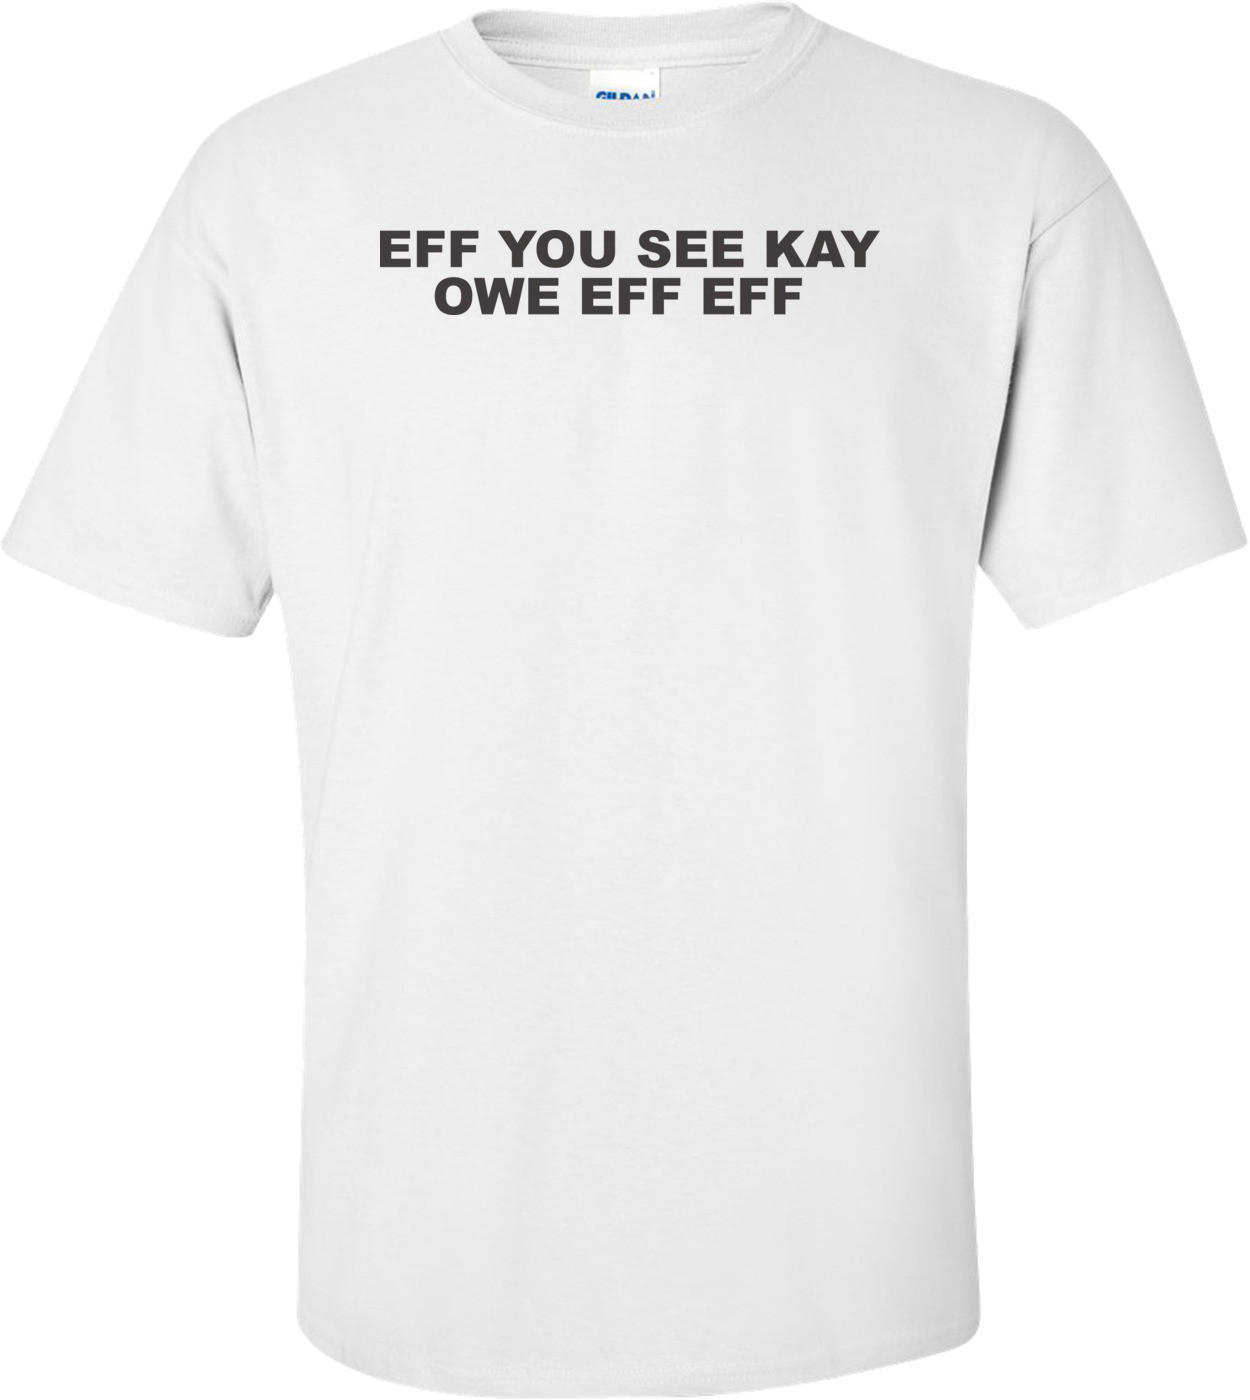 Eff You See Kay Owe Eff Eff T-shirt 